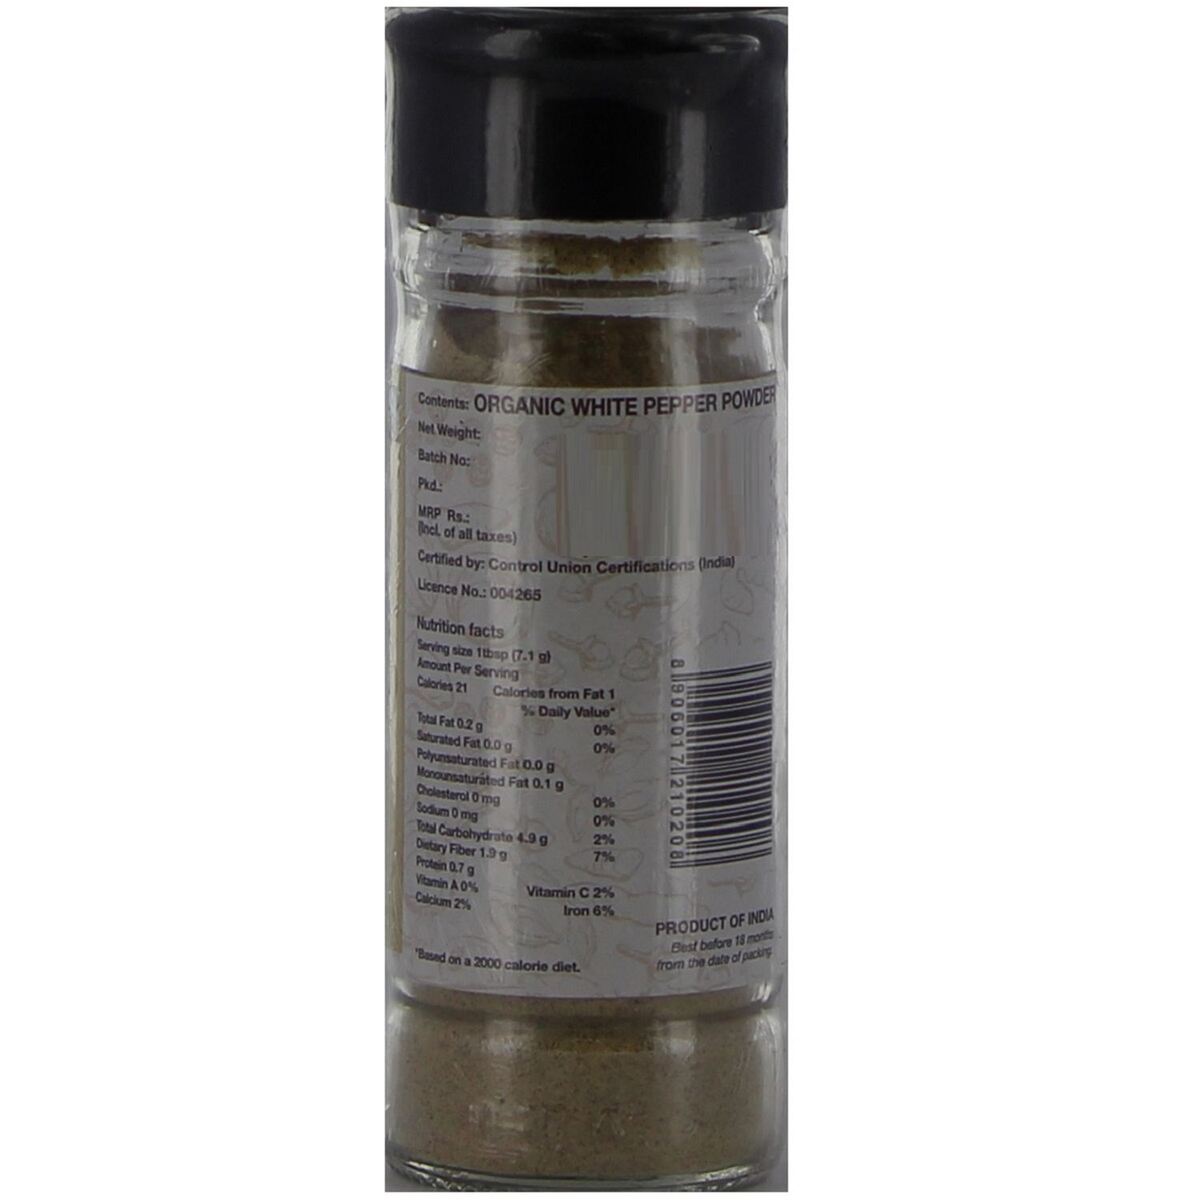 Trubio Organic White Pepper Powder 45g